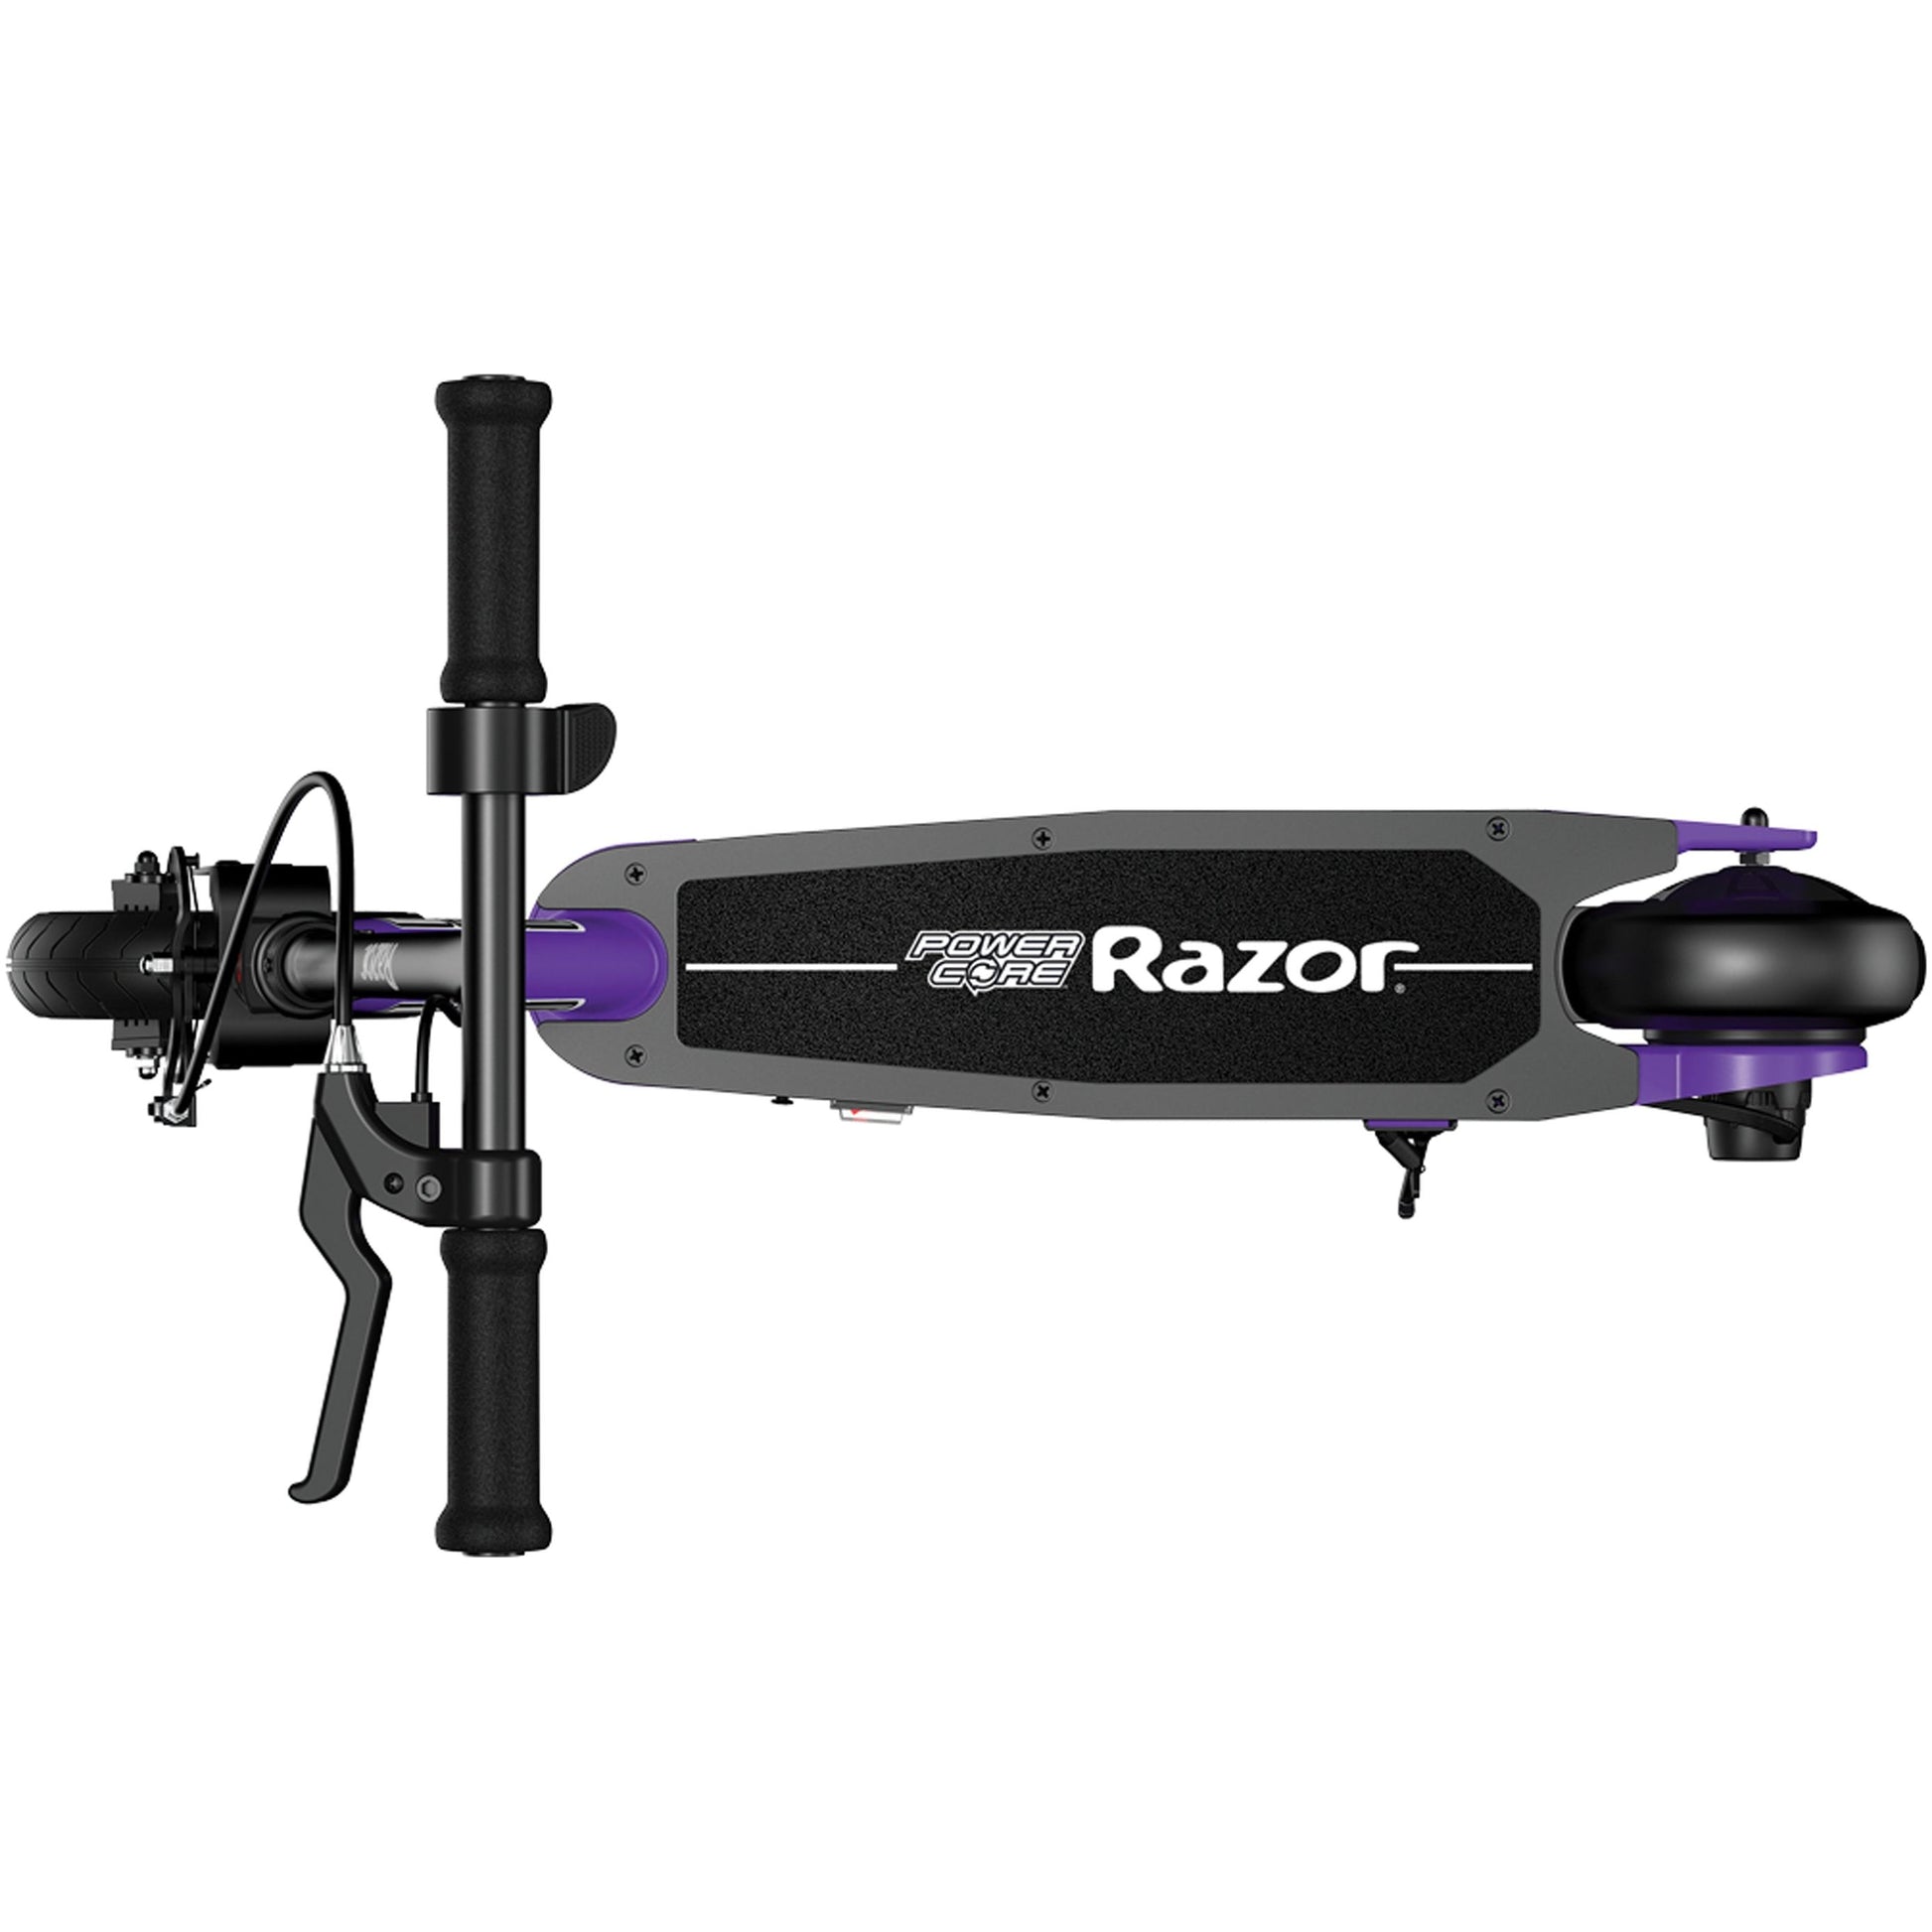 Razor PowerCore S85 12 volt Scooter - Purple deck and graphics